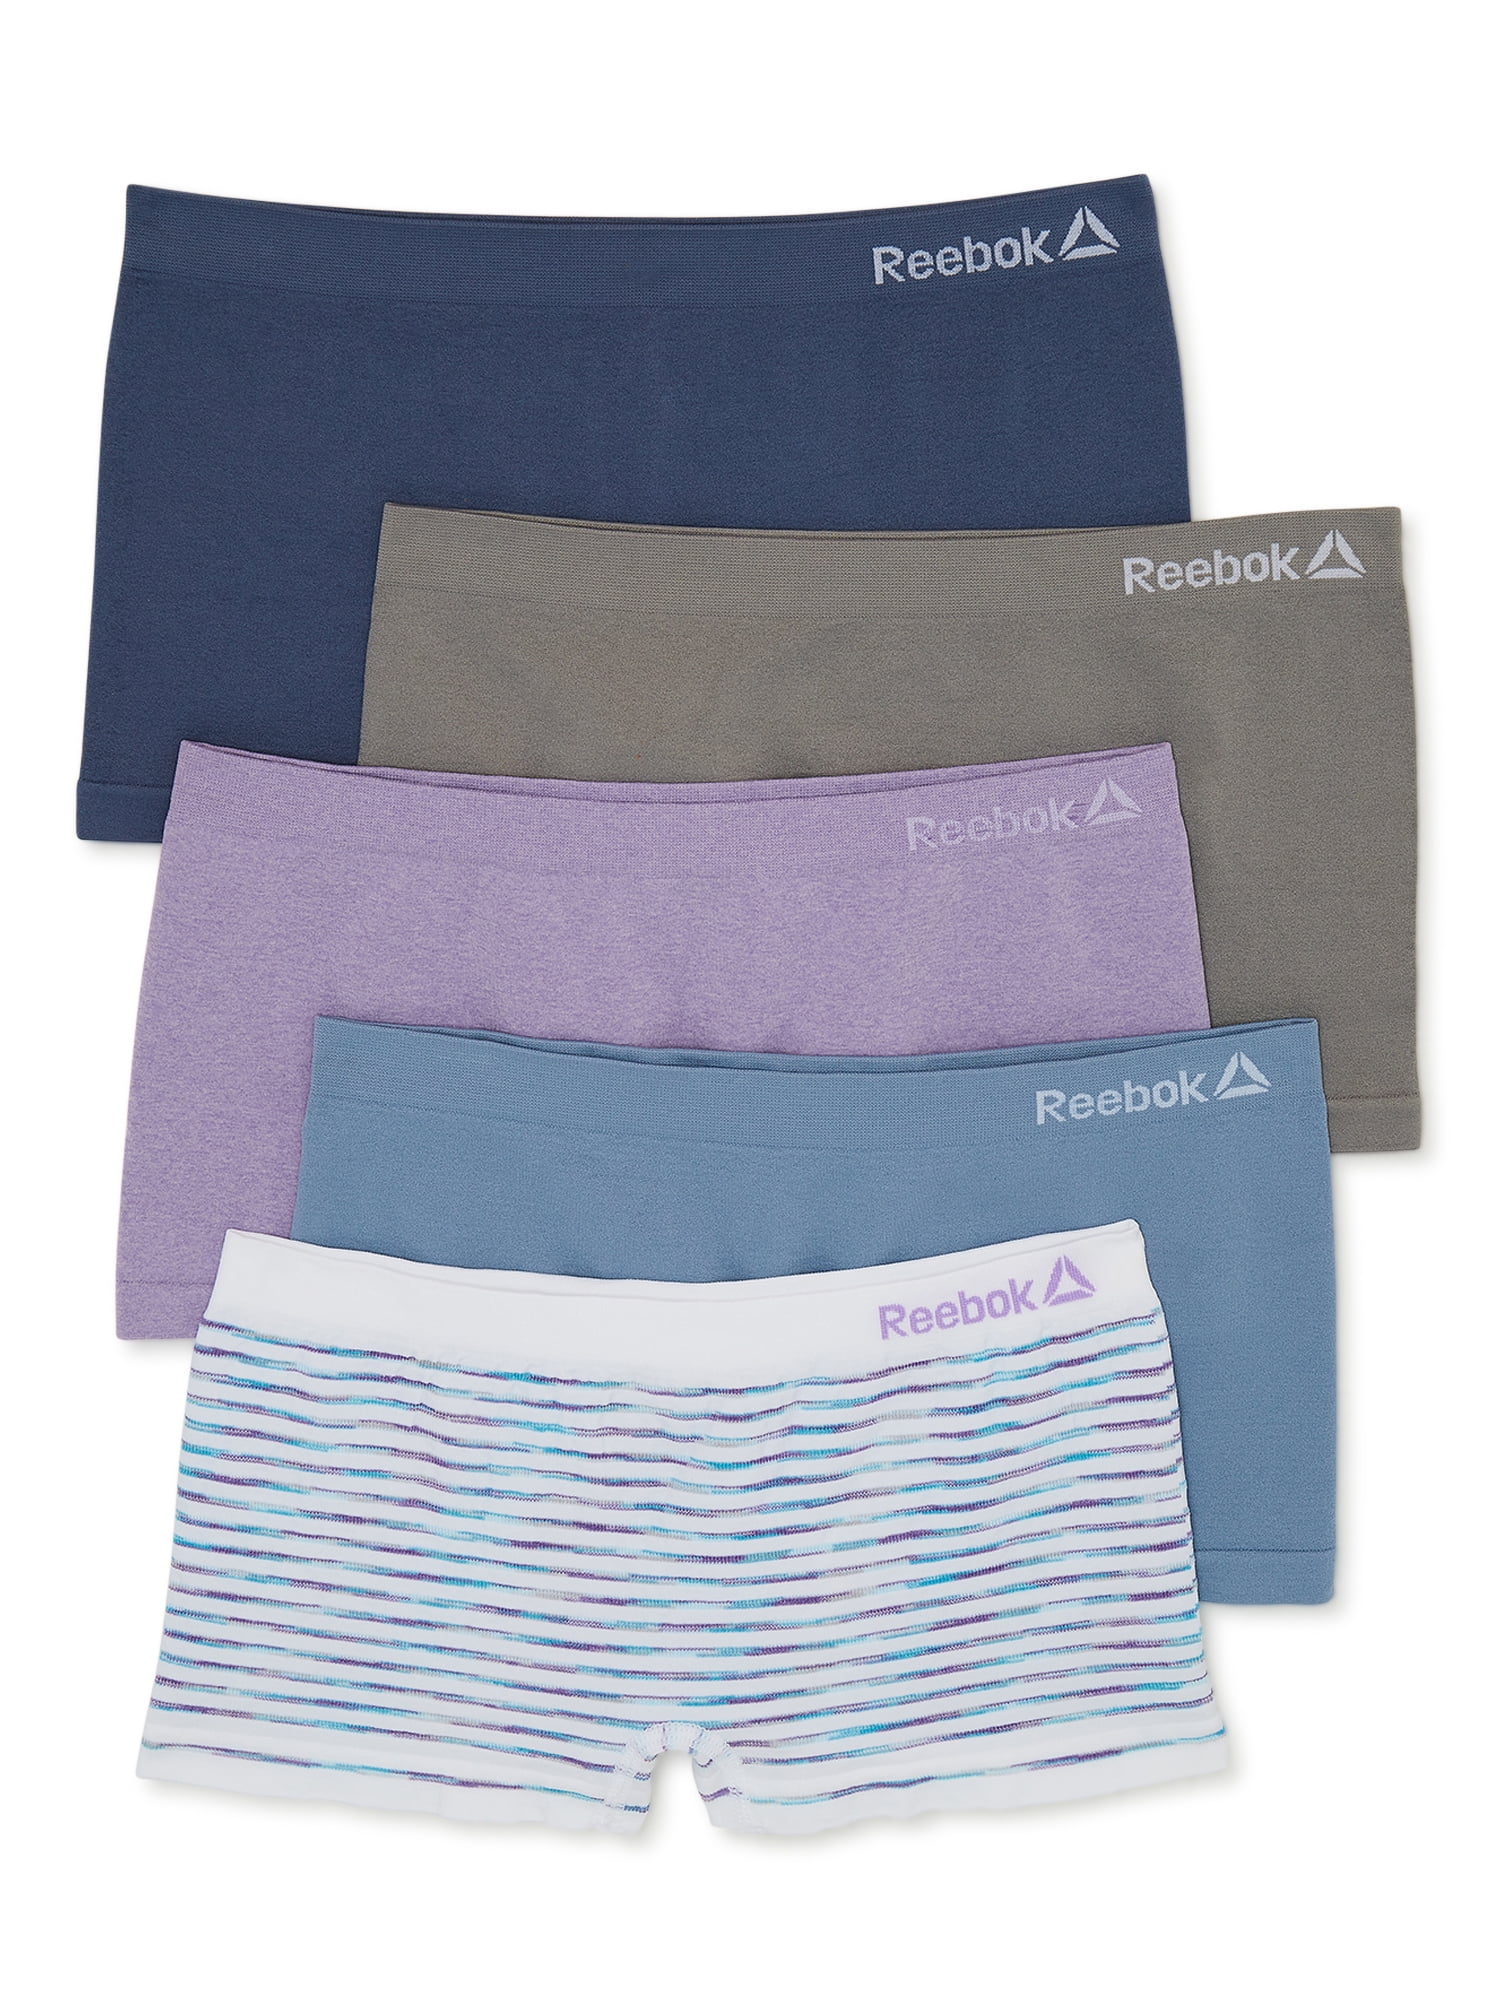 Reebok Girls Boyshorts Panties Underwear Size L 12-14